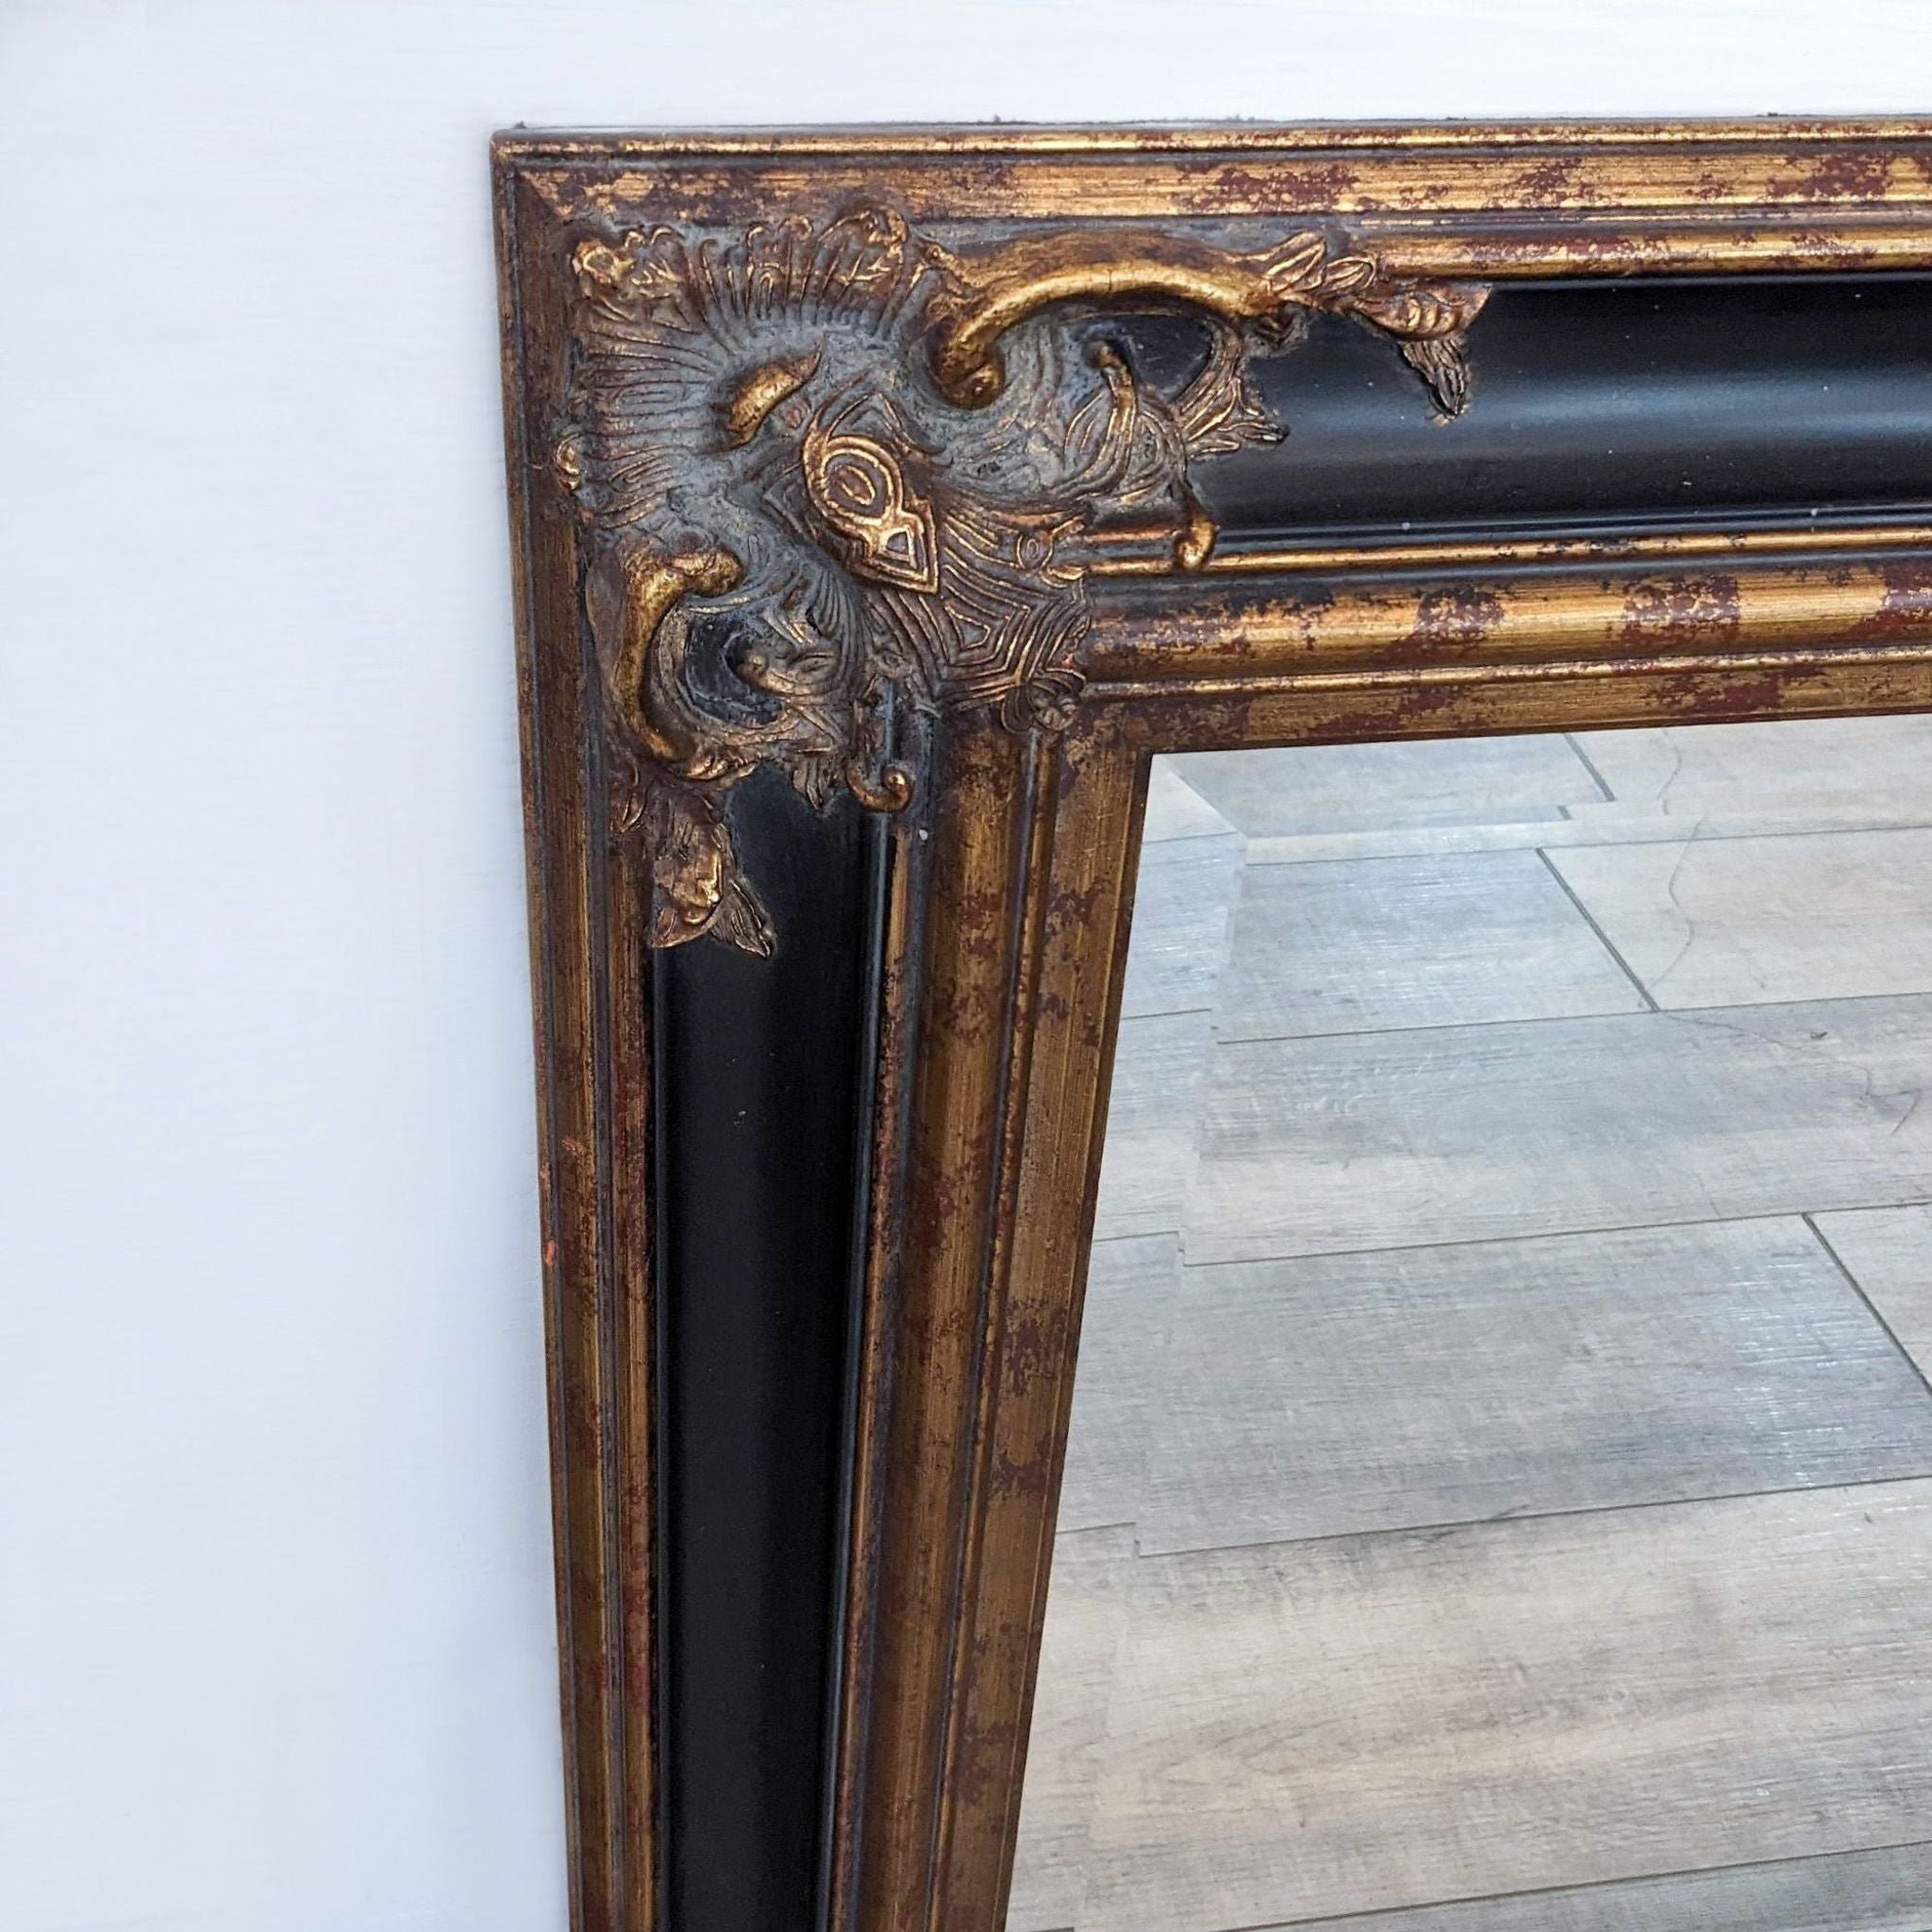 Elegant Baker Knapp and Tubbs mirror featuring ornate frame details, showcasing the vintage design.